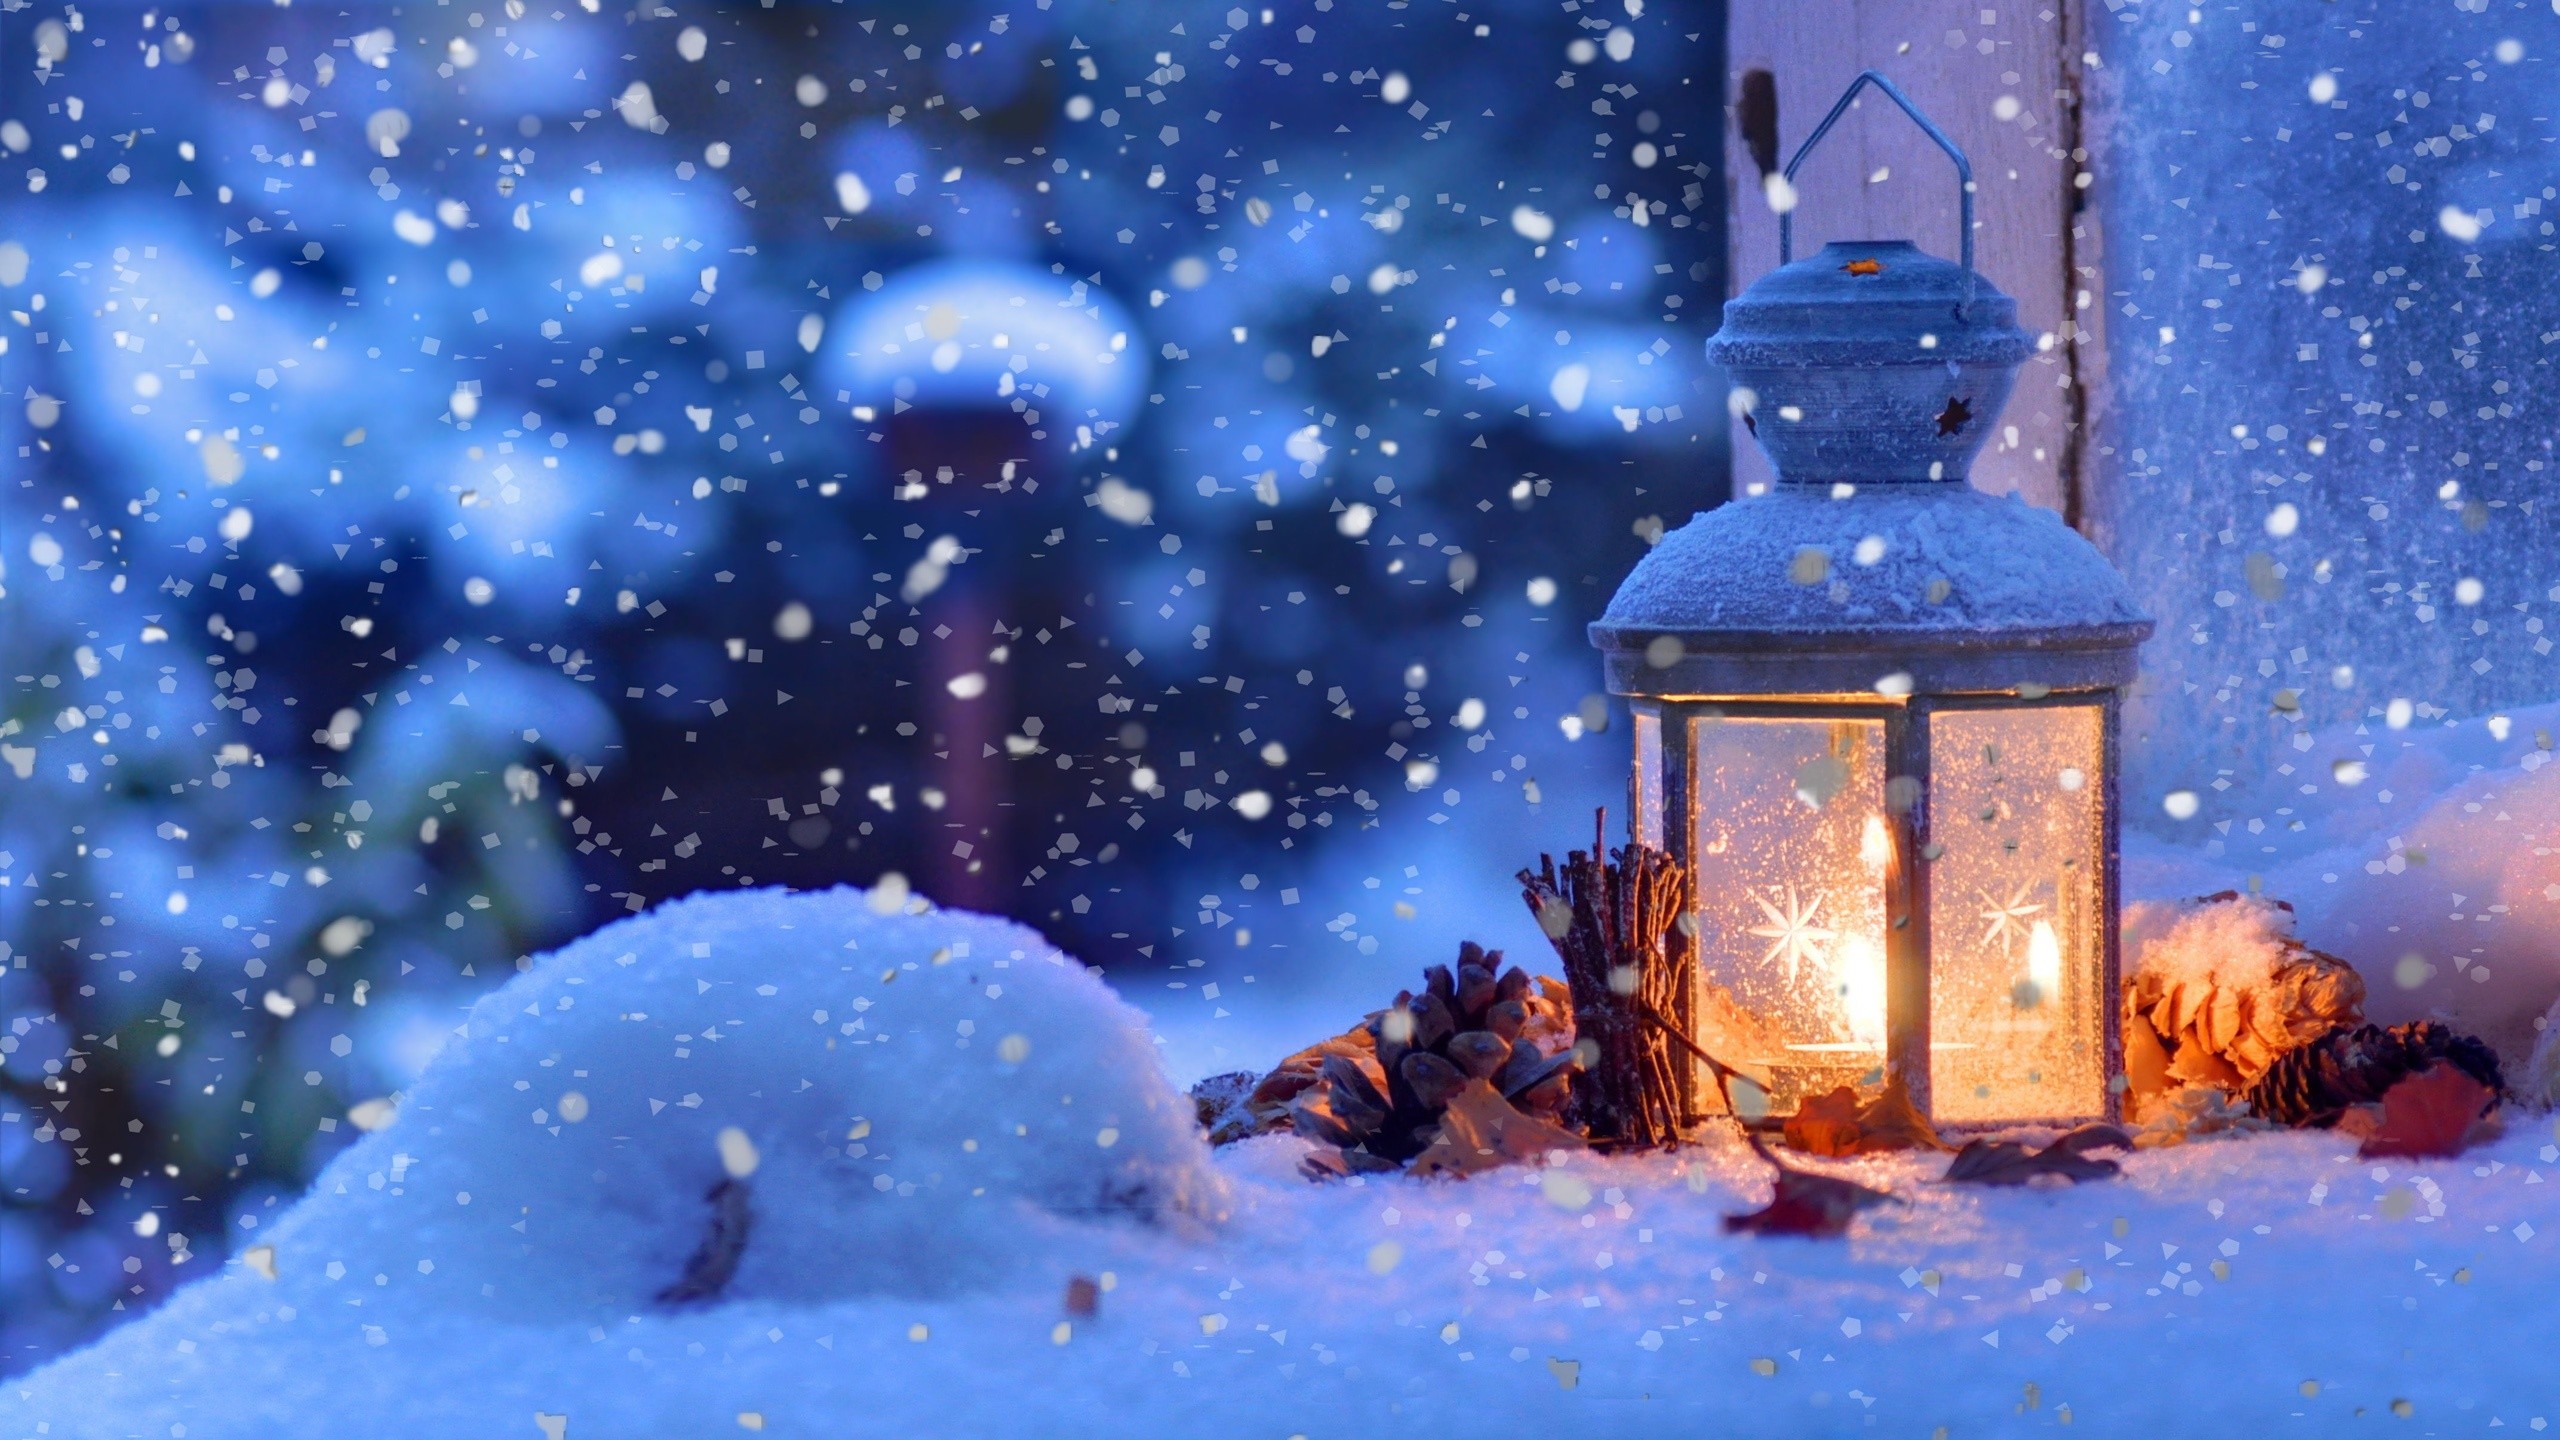 2560x1440 Christmas Snowflakes Winter Light Desktop Wallpaper Uploaded by DesktopWalls